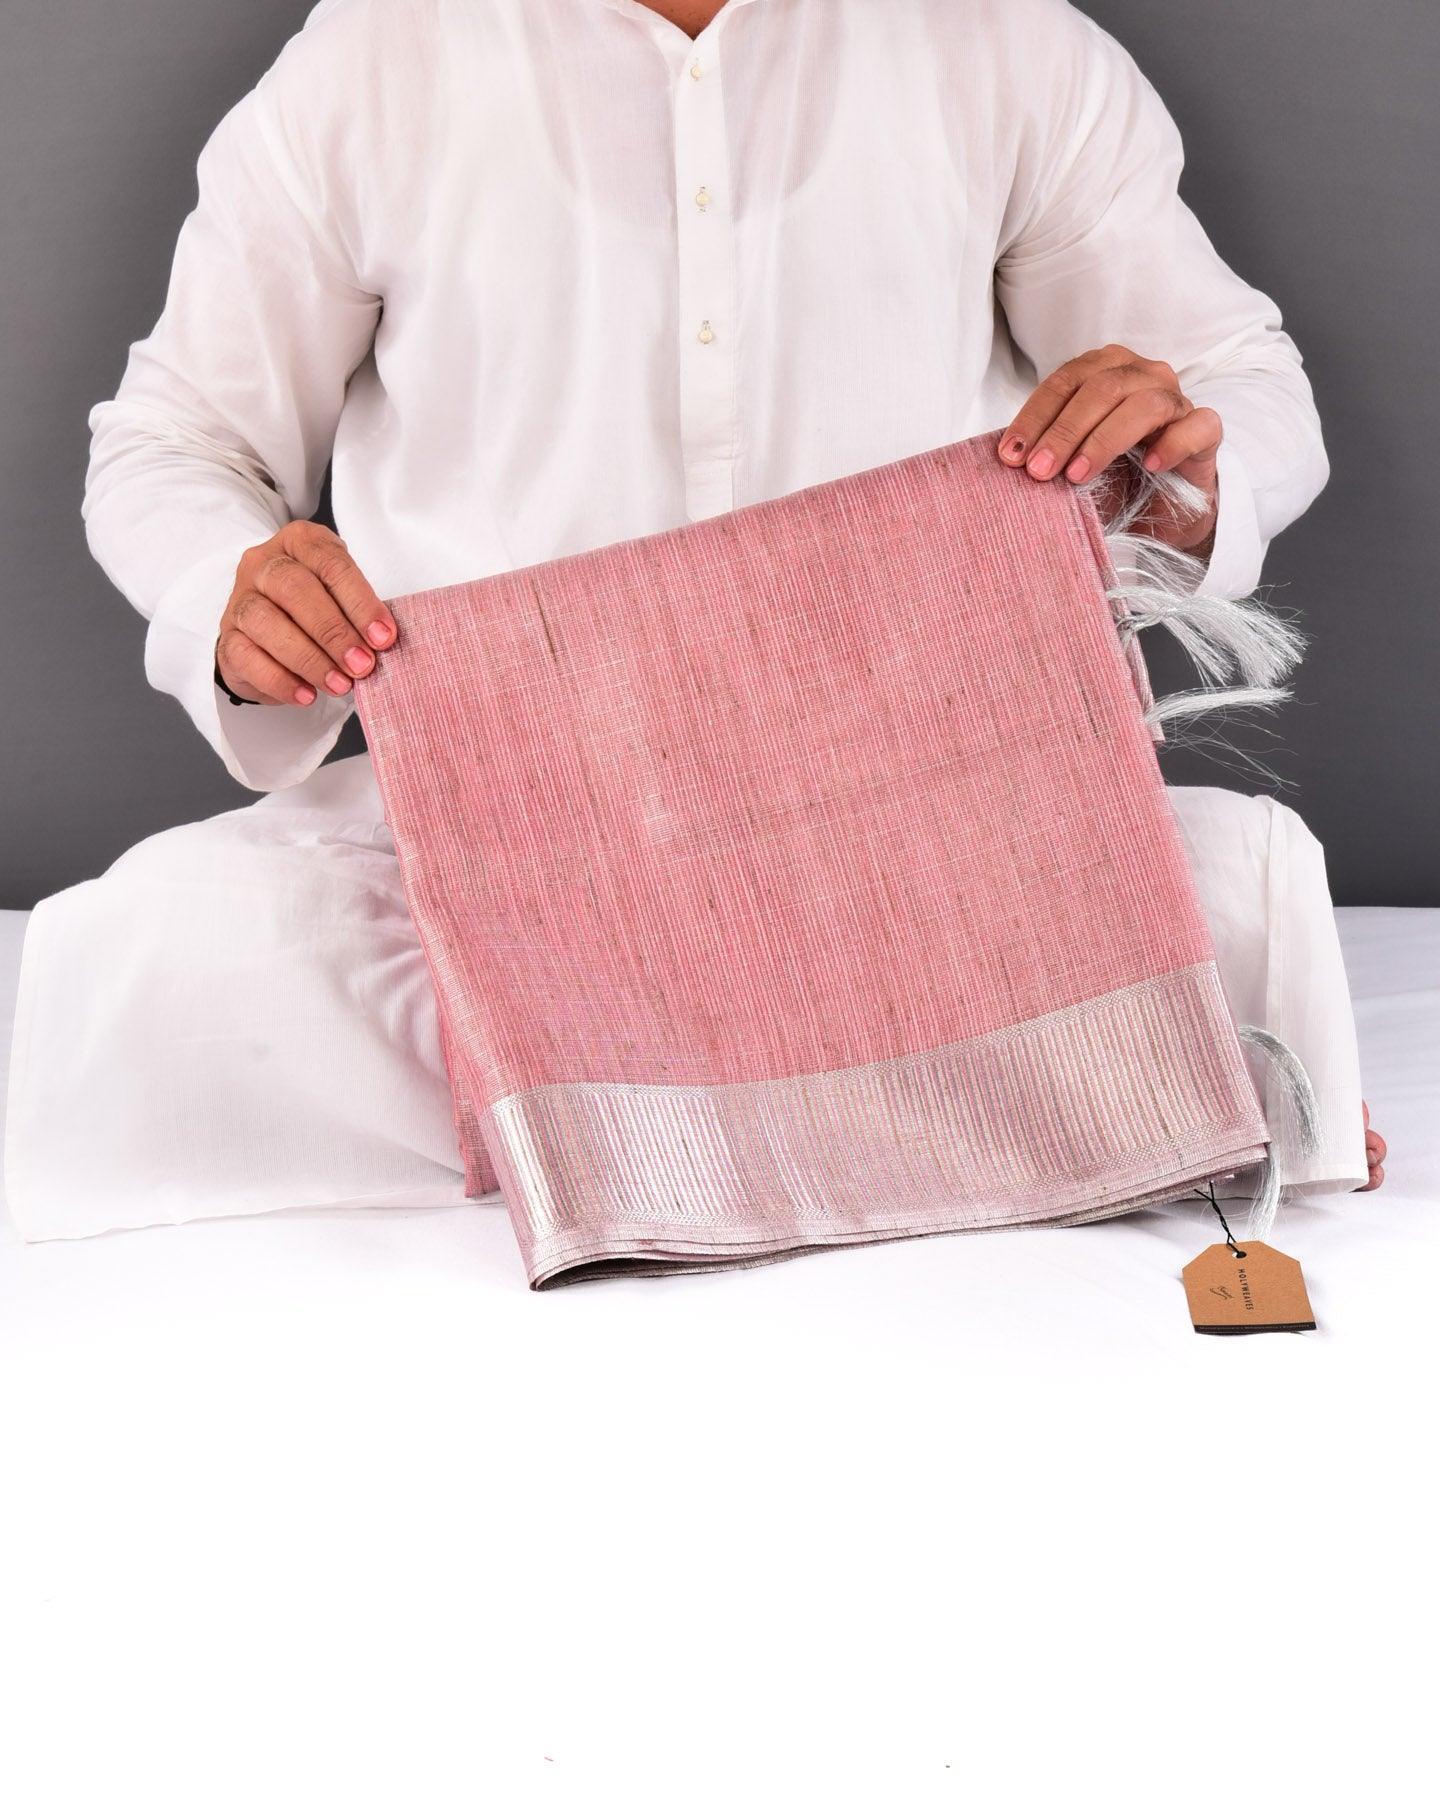 Metallic Pink Banarasi Contemporary Brocade Woven Blended Cotton Tissue Saree with Striped Zari Border - By HolyWeaves, Benares